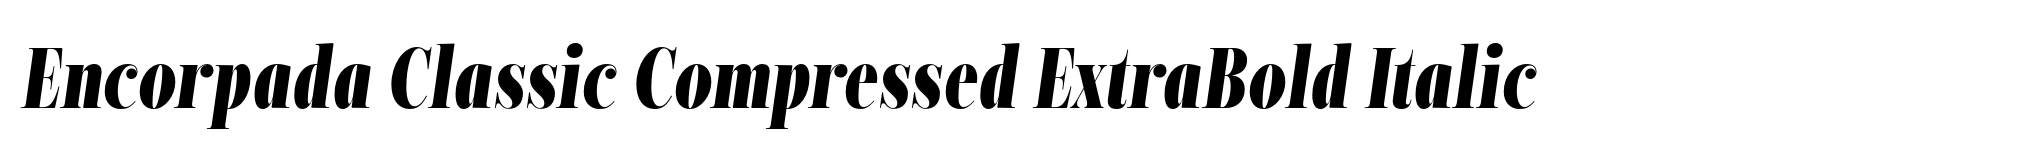 Encorpada Classic Compressed ExtraBold Italic image